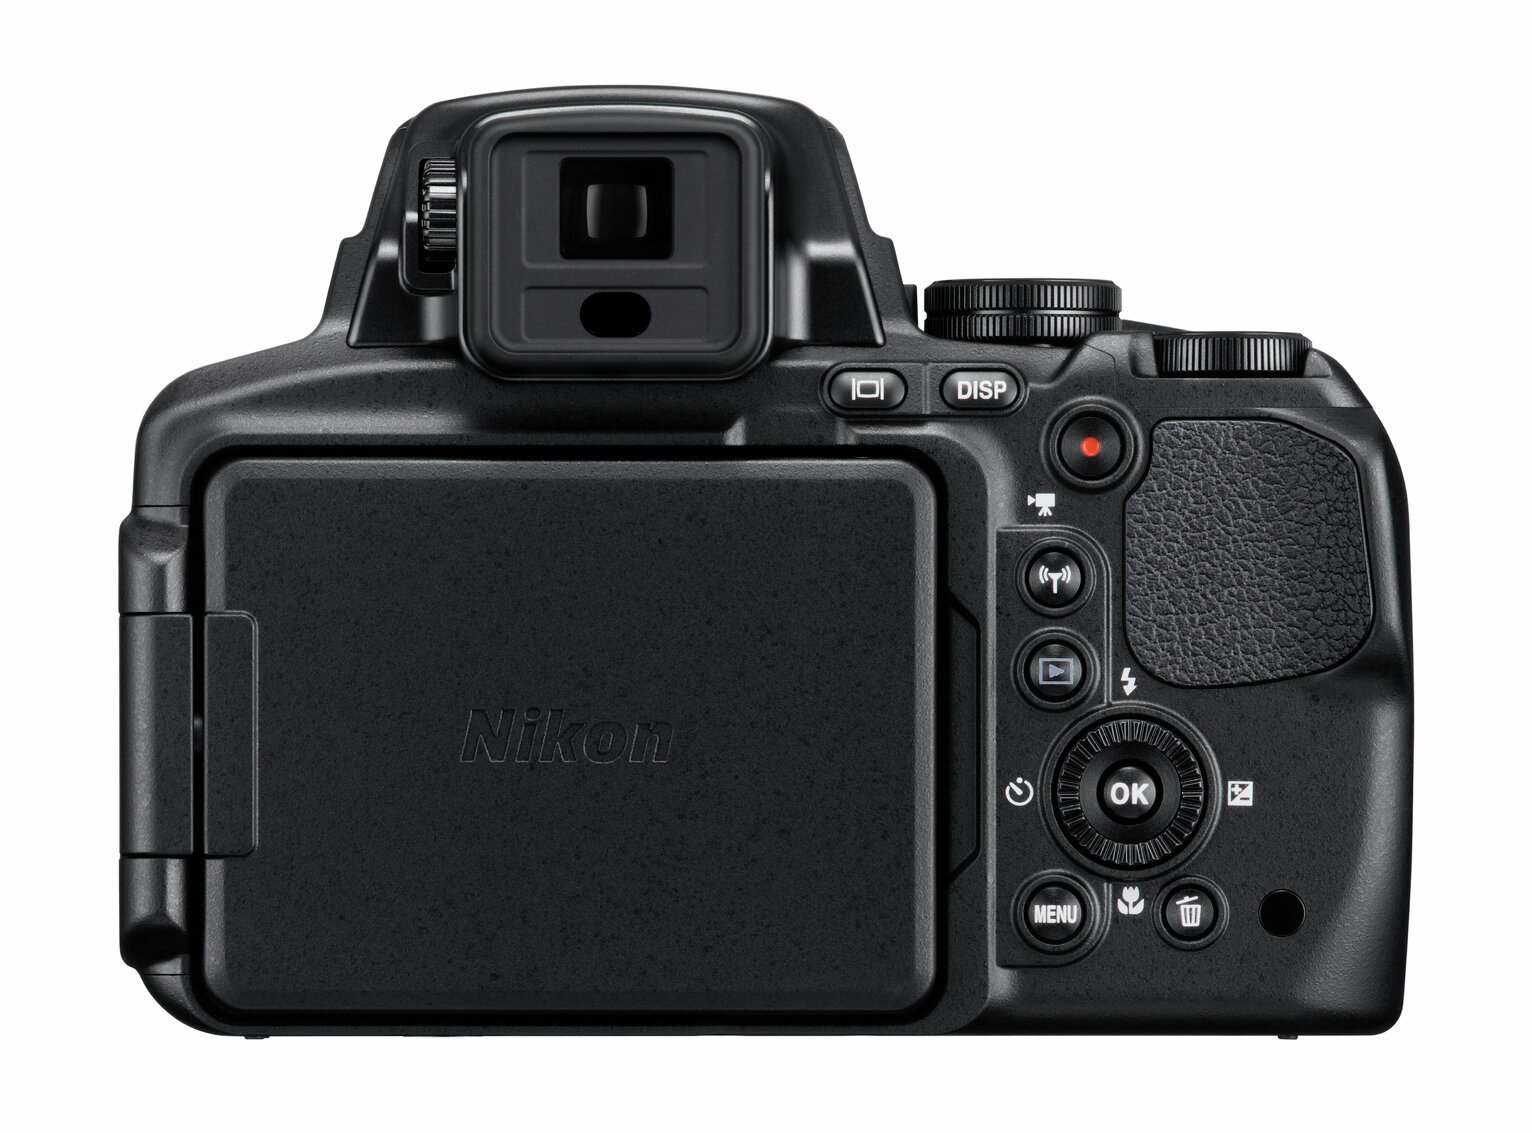 Nikon Coolpix P900 Bridge Camera Review